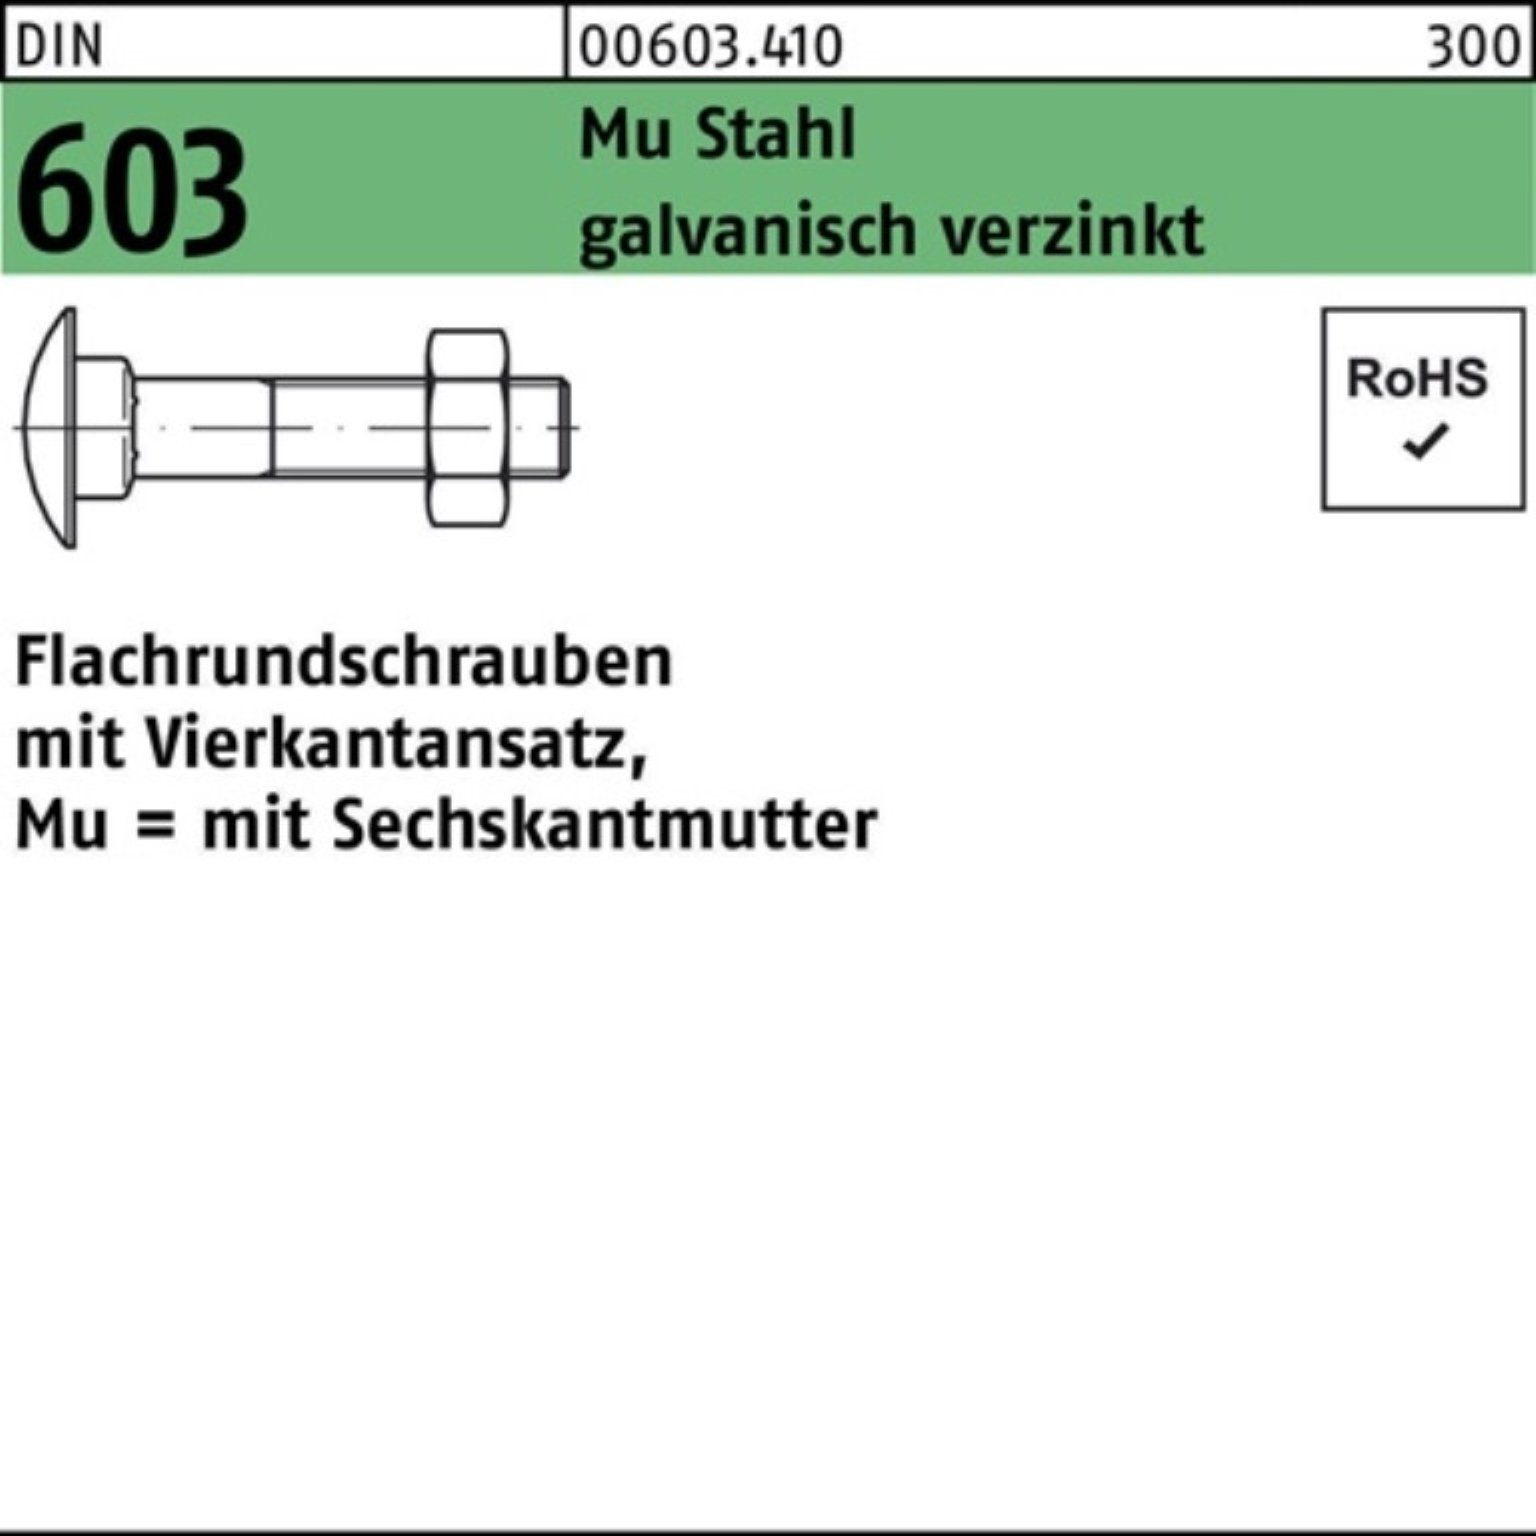 Reyher Schraube 100er Flachrundschraube Vierkantansatz/6-ktmutter M8x100 Pack 603 DIN